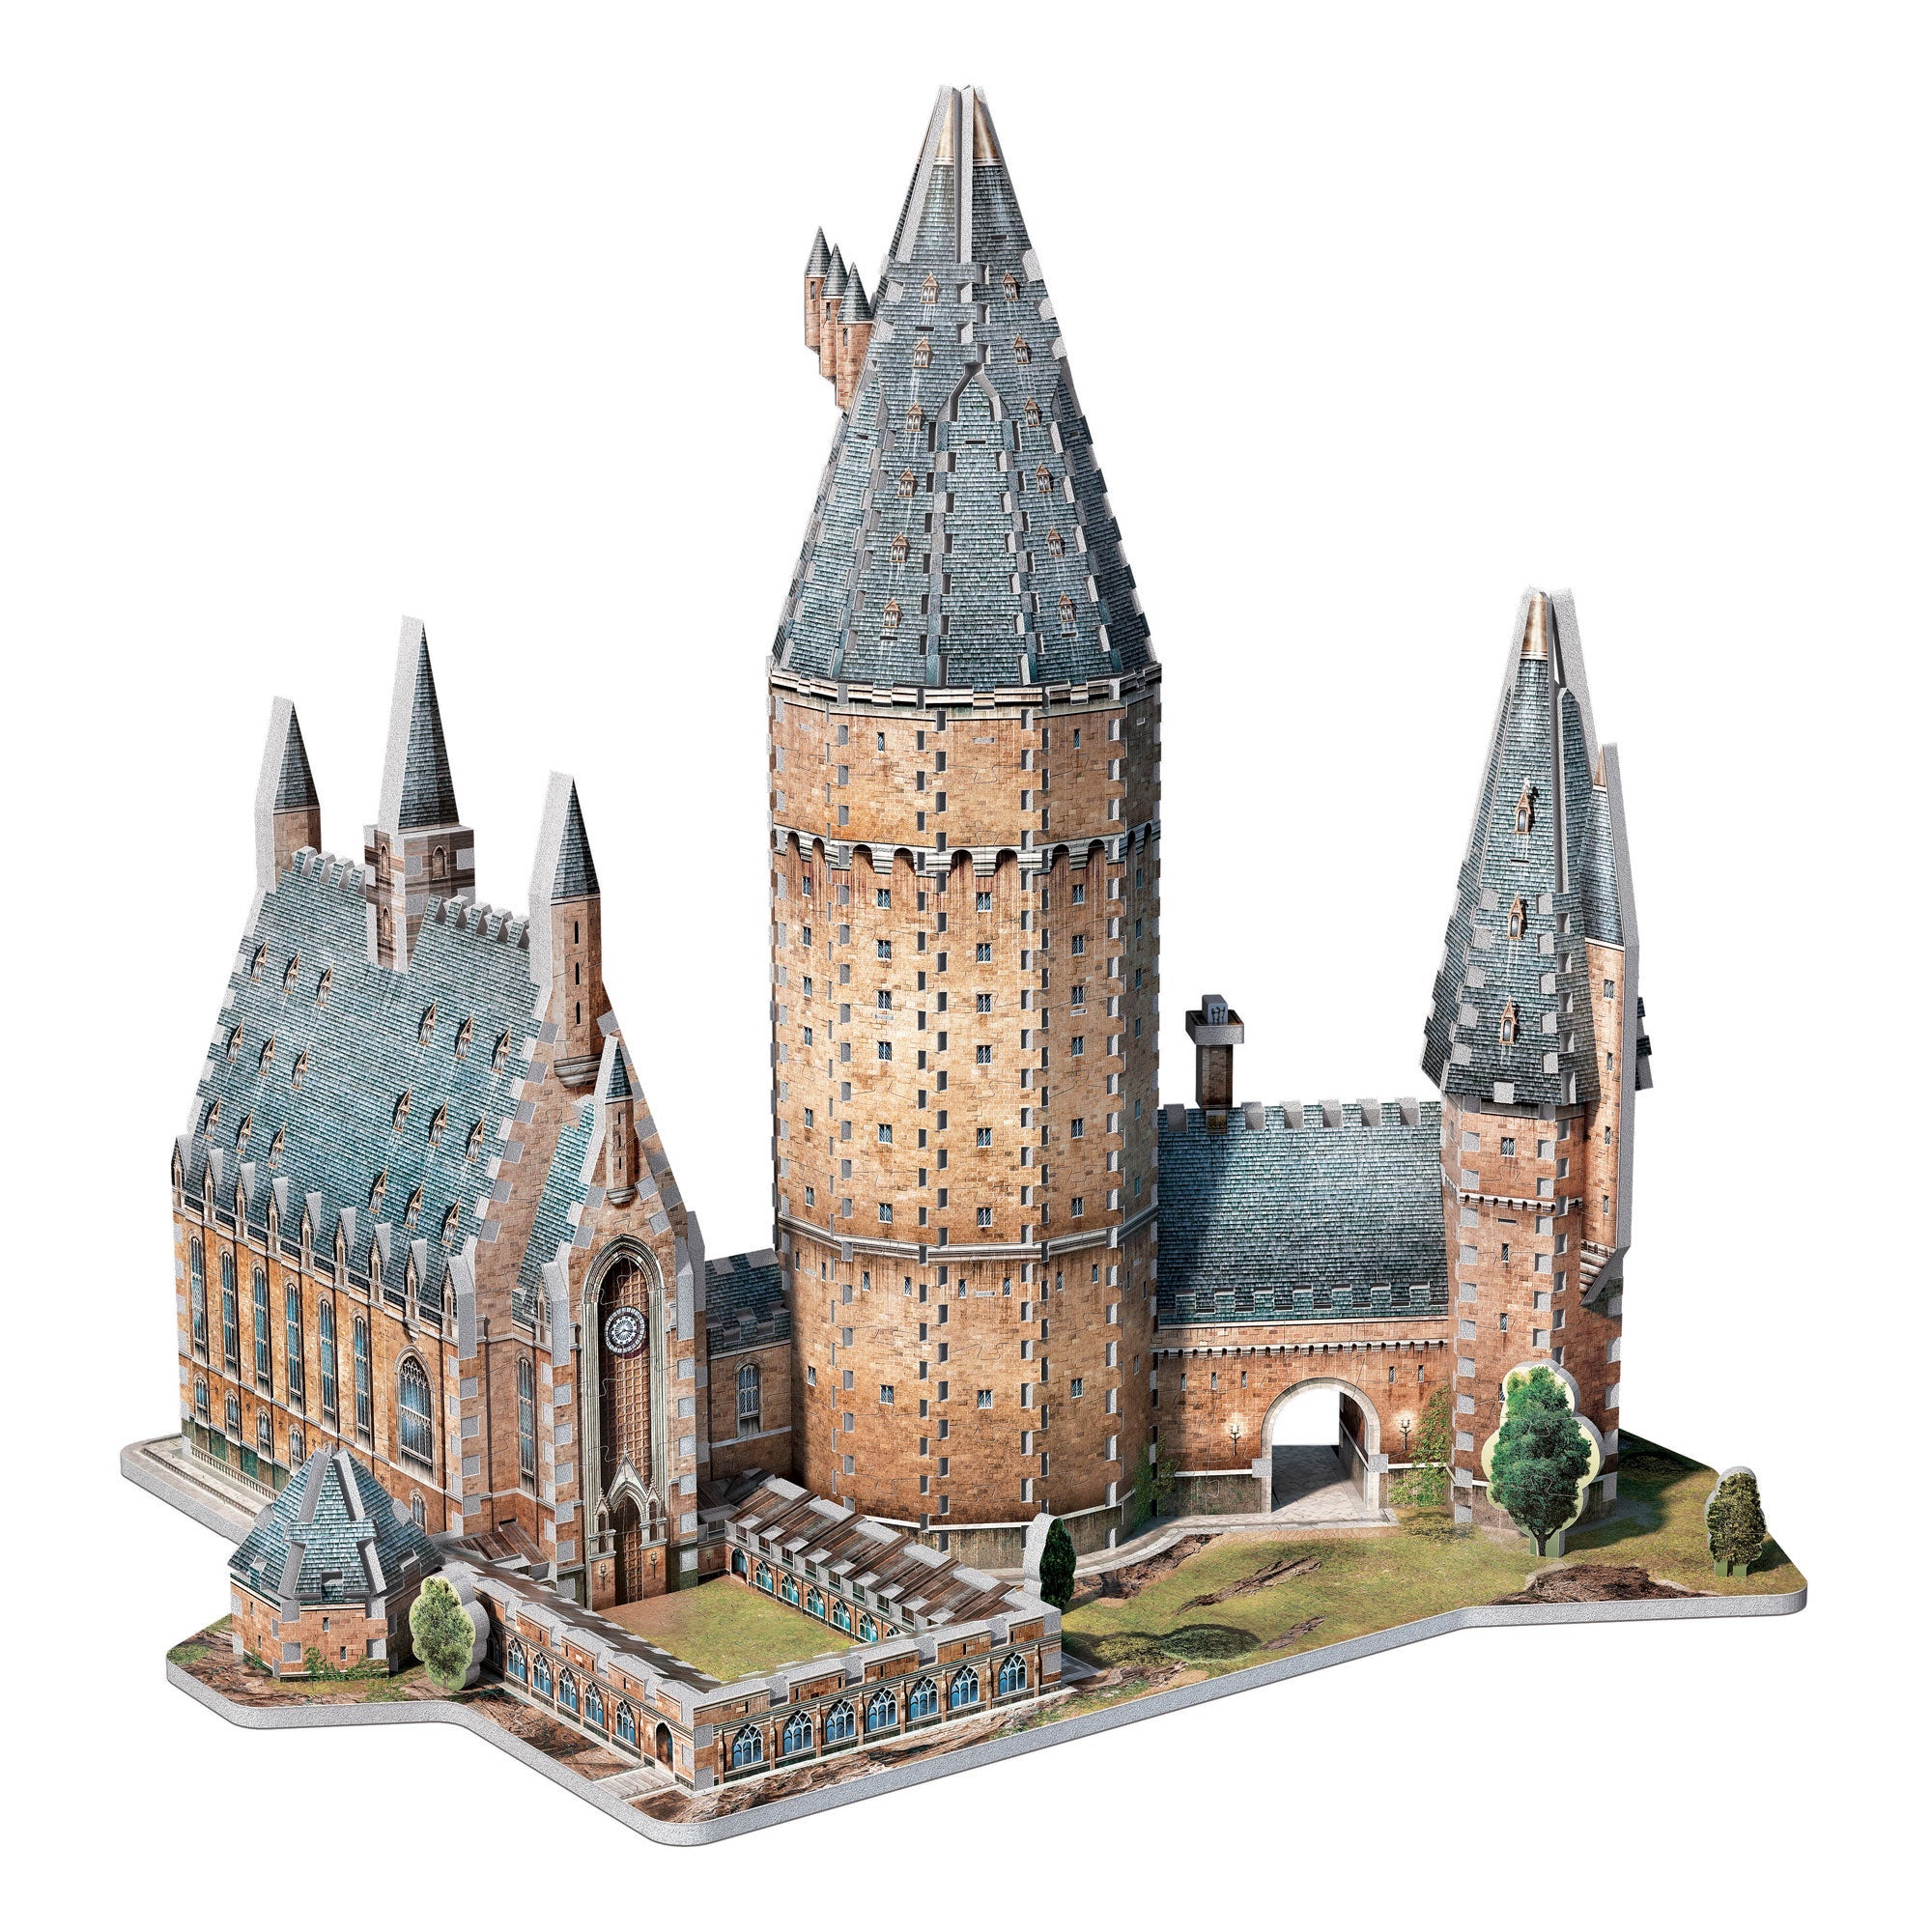 3D Puzzle - Harry Potter Hogwarts Great Hall 850pc Puzzle